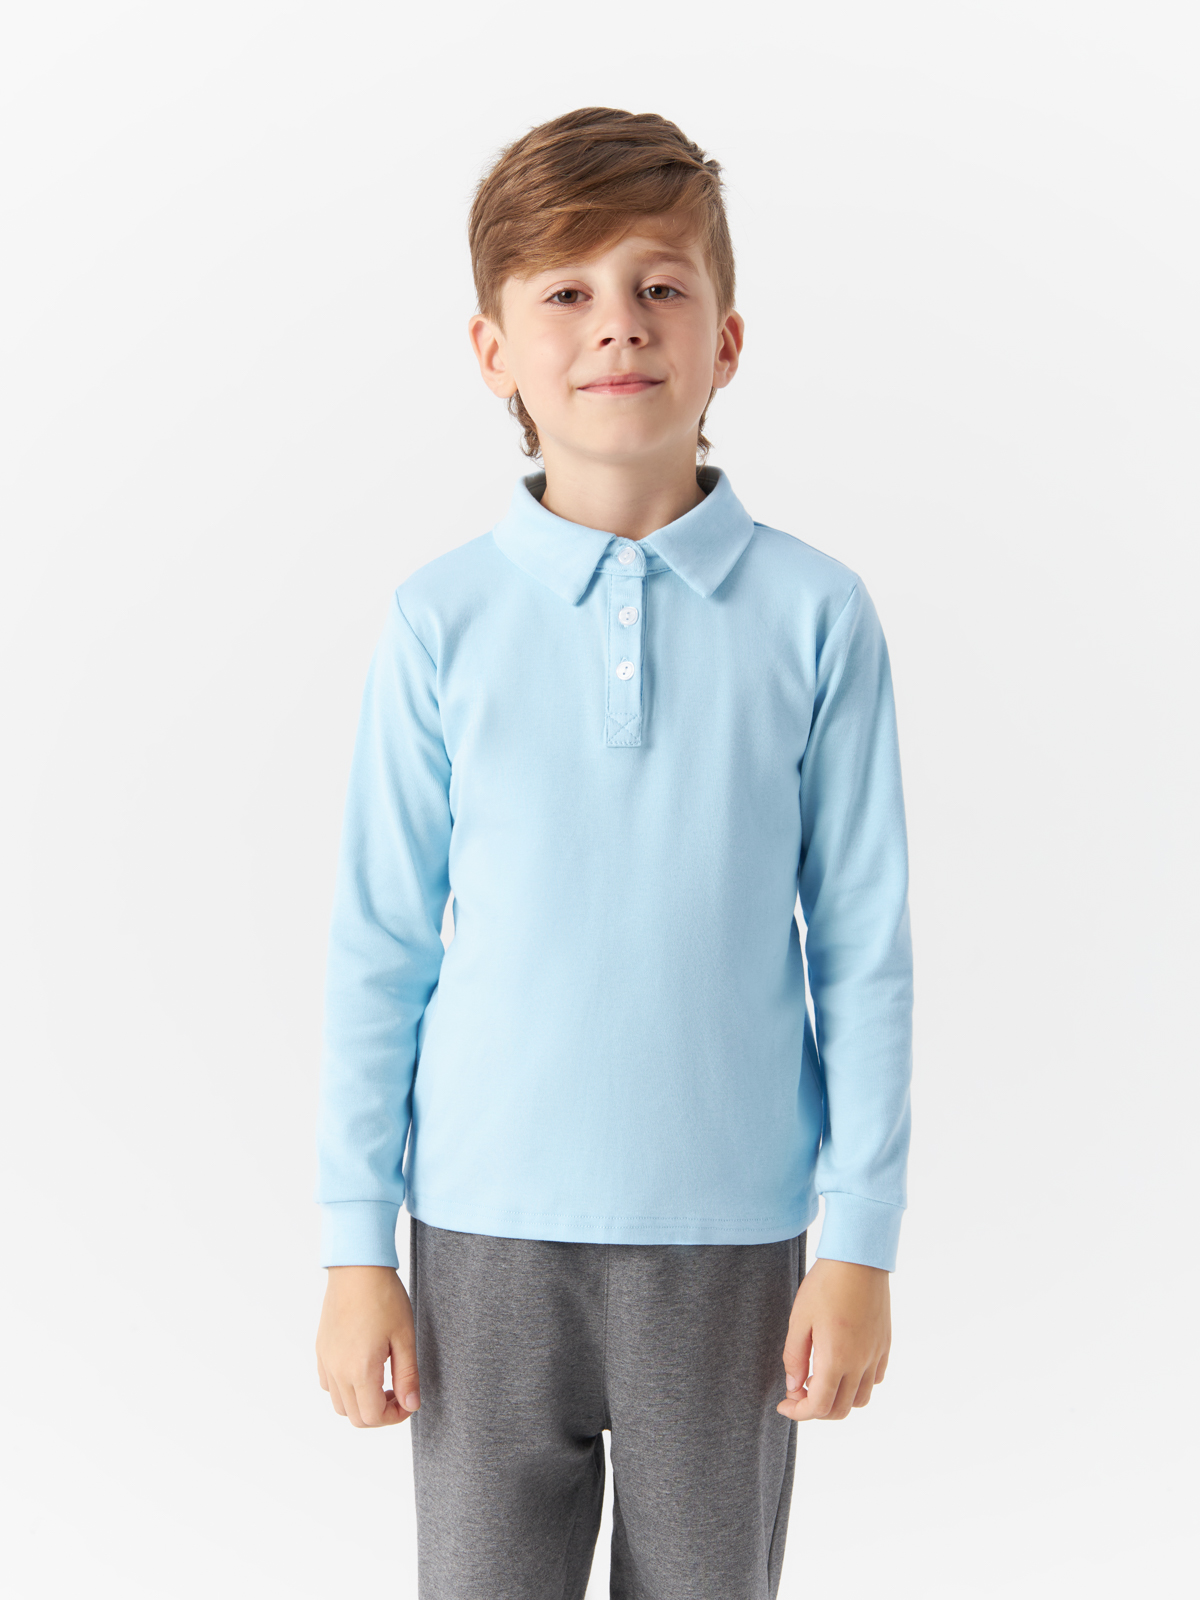 Рубашка Yiwu Xflot Supply Chain детская, BS-8lightblue, размер 130 см